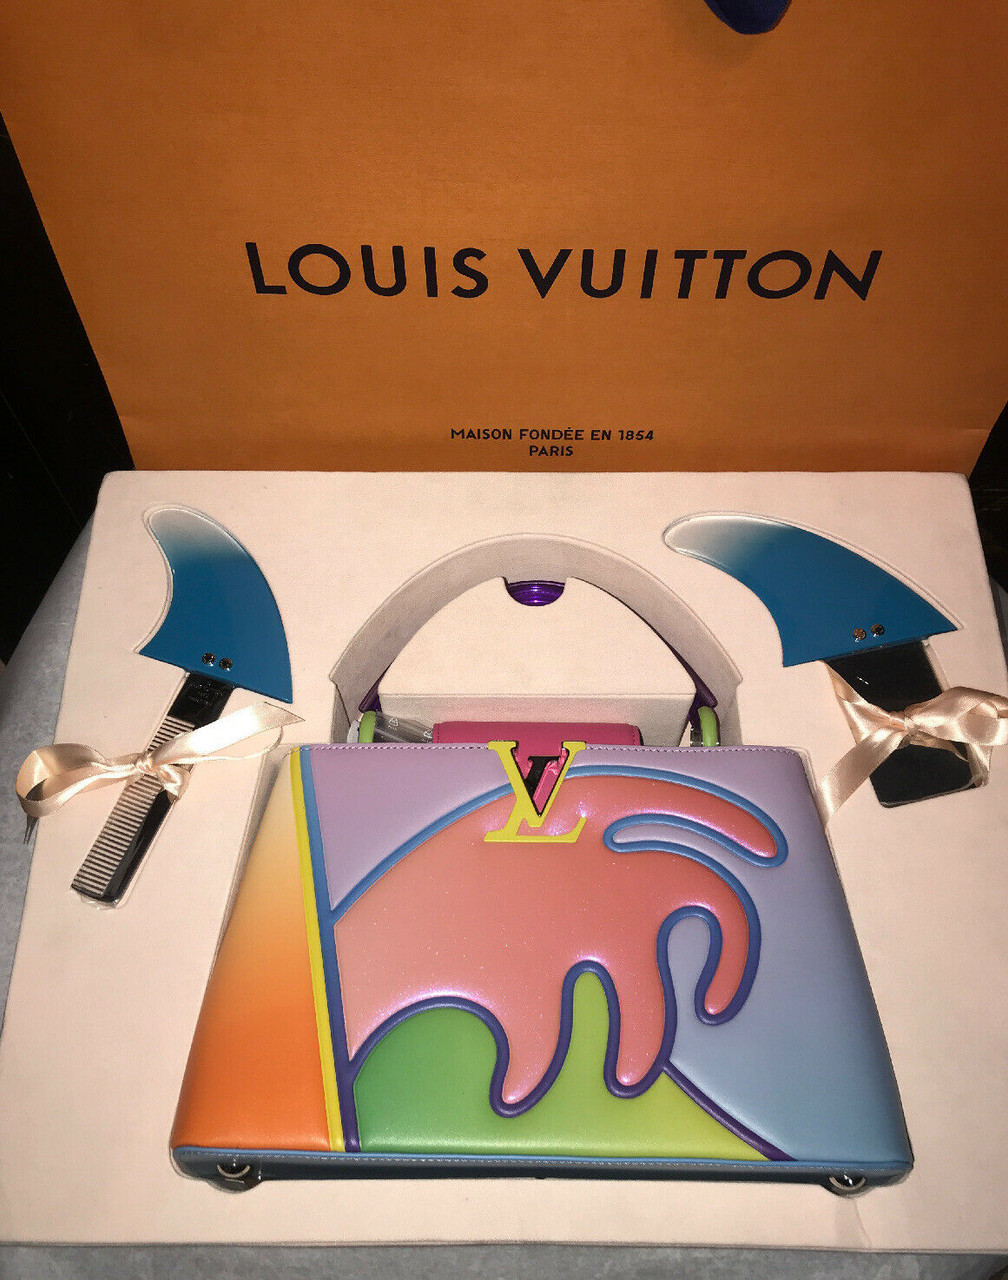 Capucines leather handbag Louis Vuitton Multicolour in Leather - 26750405